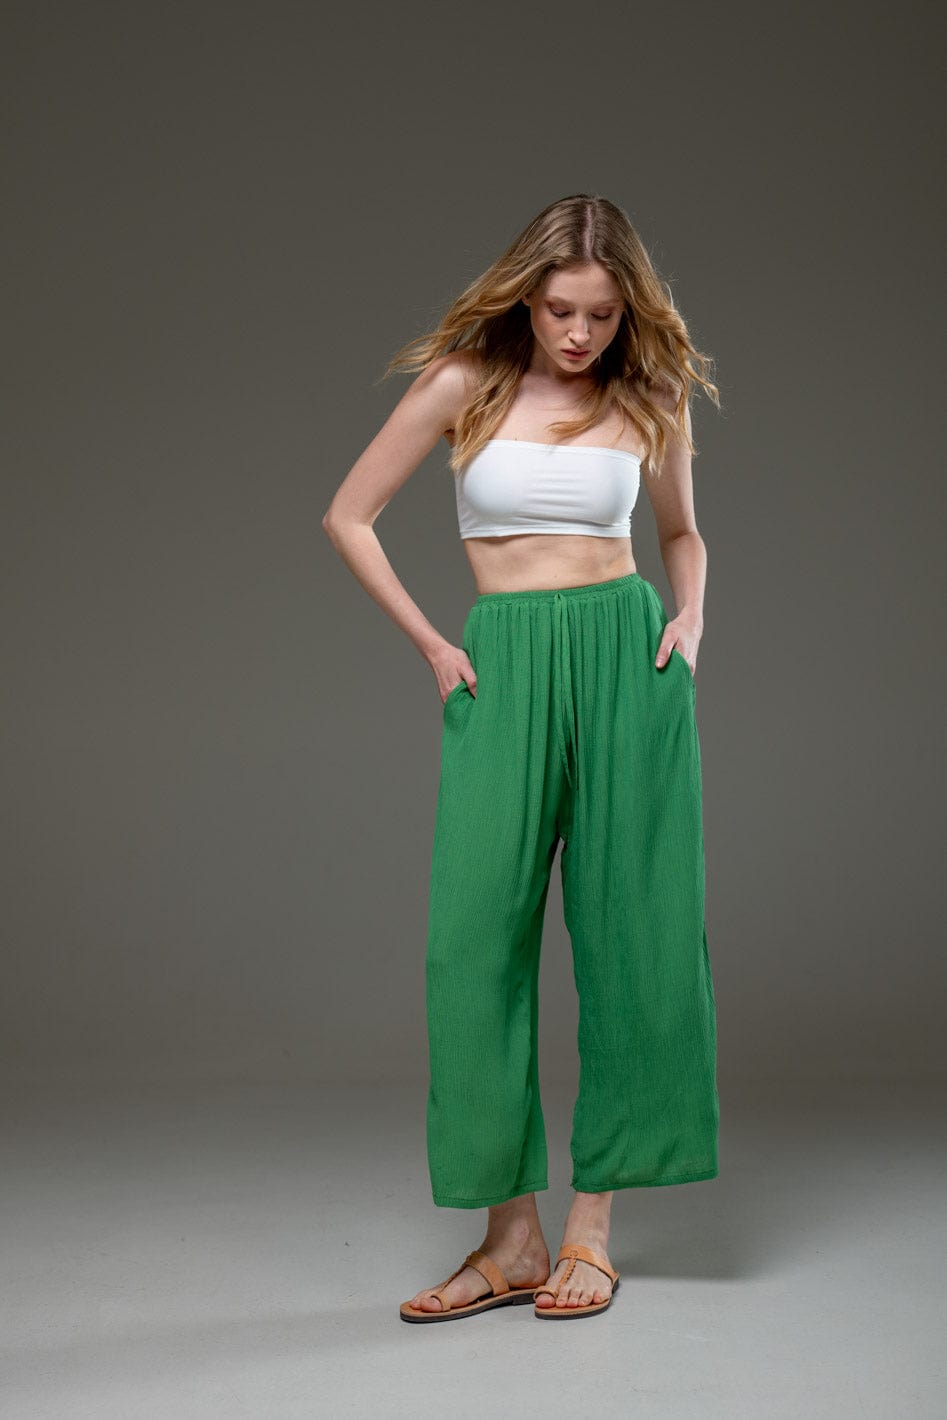 Green Rayon Crepe Full Length elegant pants